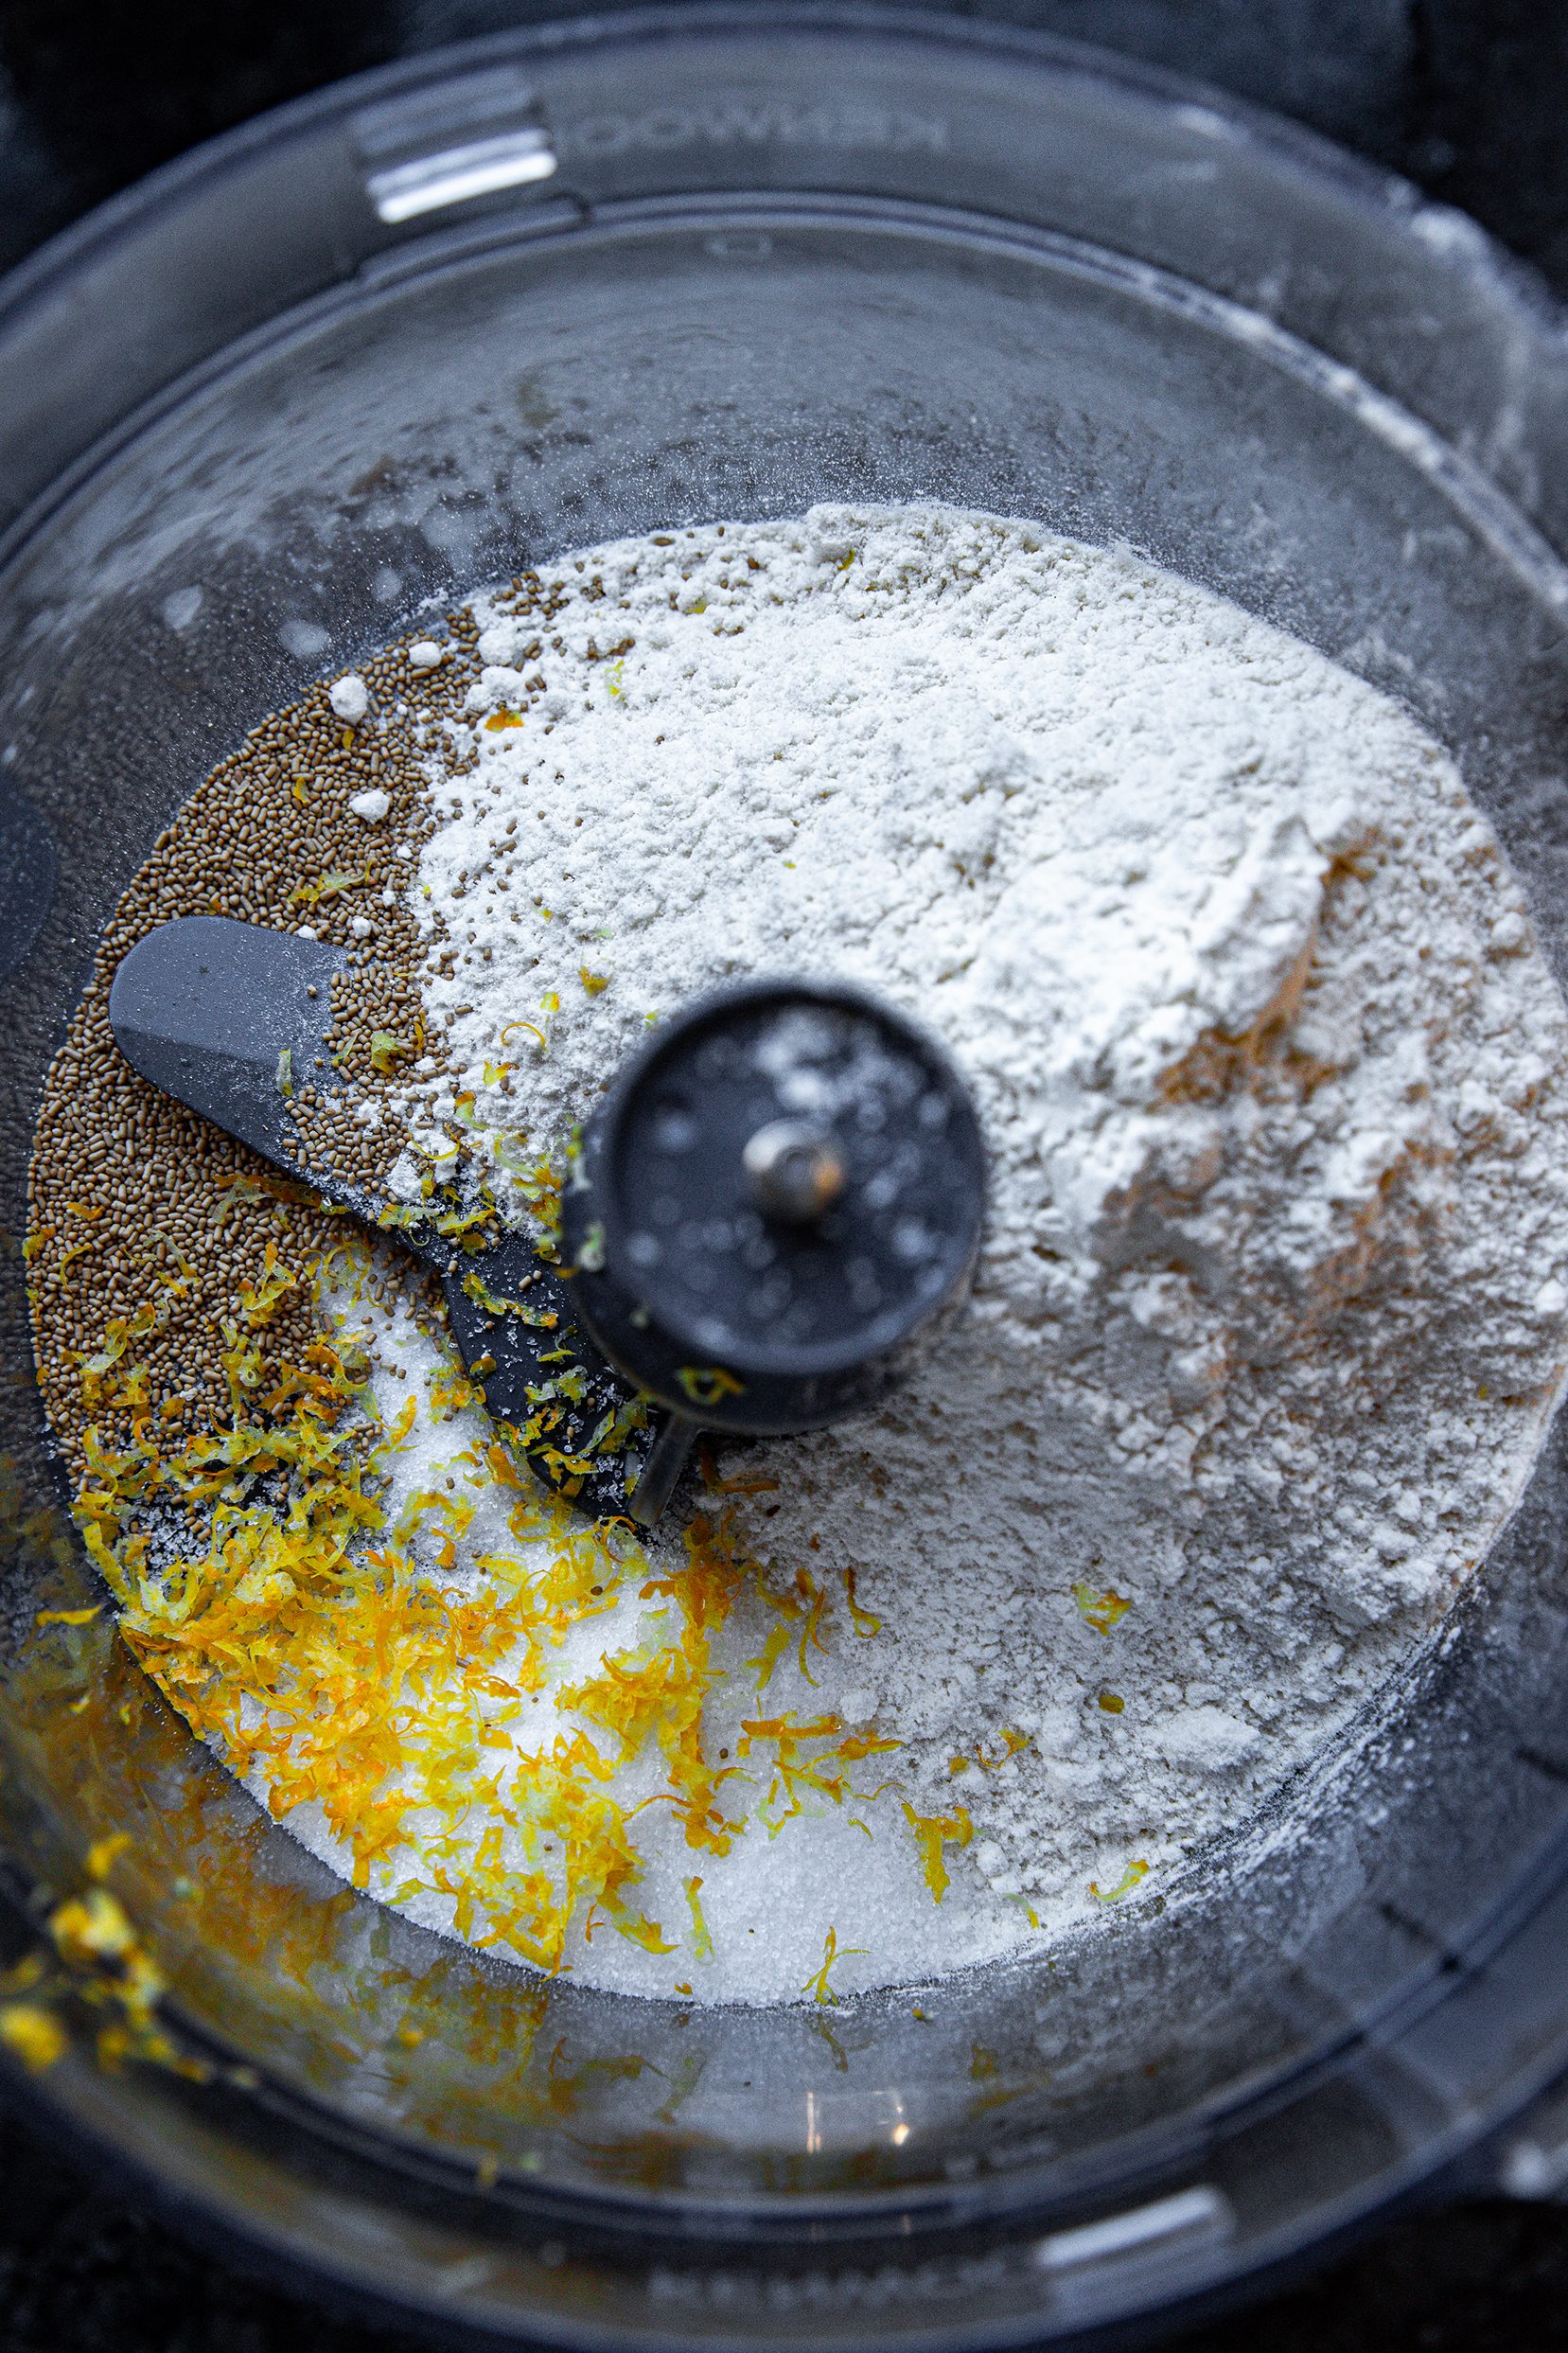 In a mixer combine the flour, yeast, salt, sugar, and lemon zest.